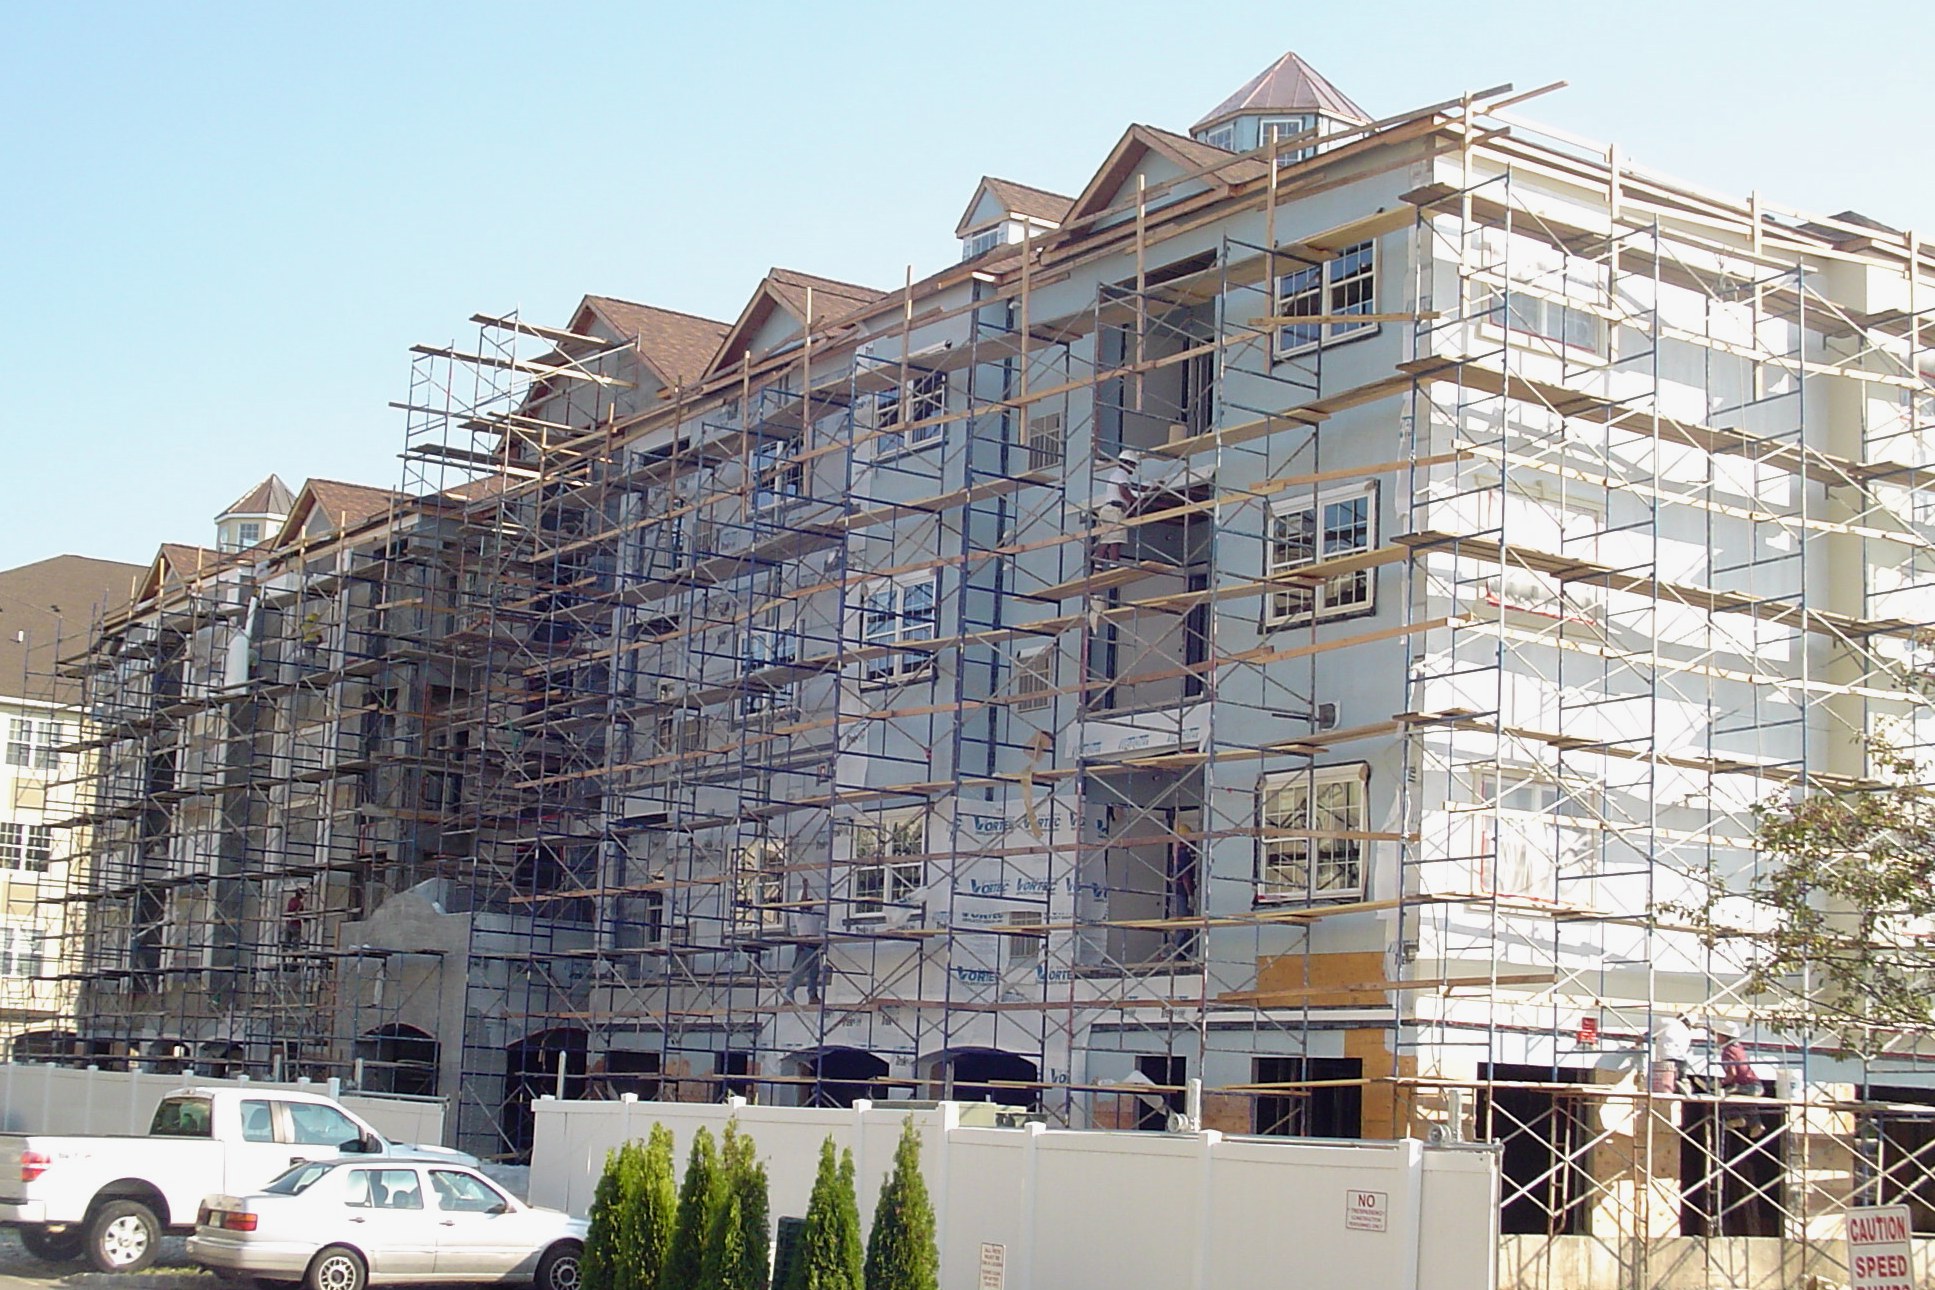 Apt building in Passaic County, OSHA compliant scaffolding